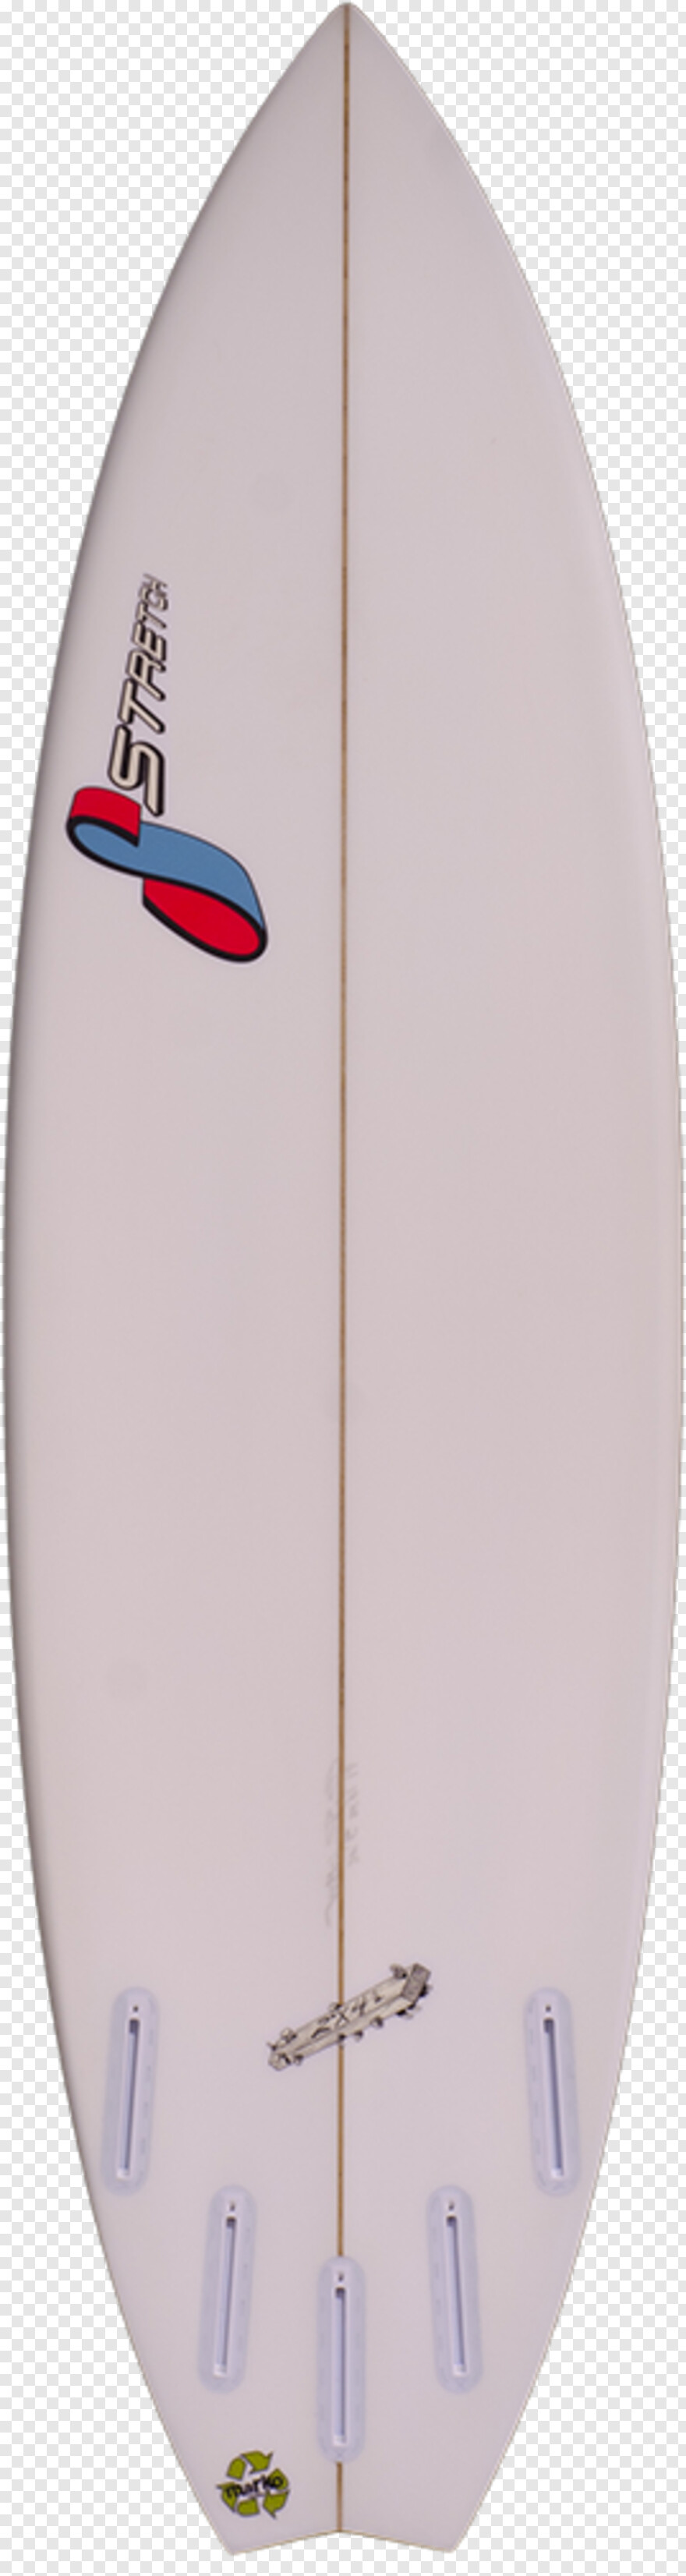 surfboard # 607855